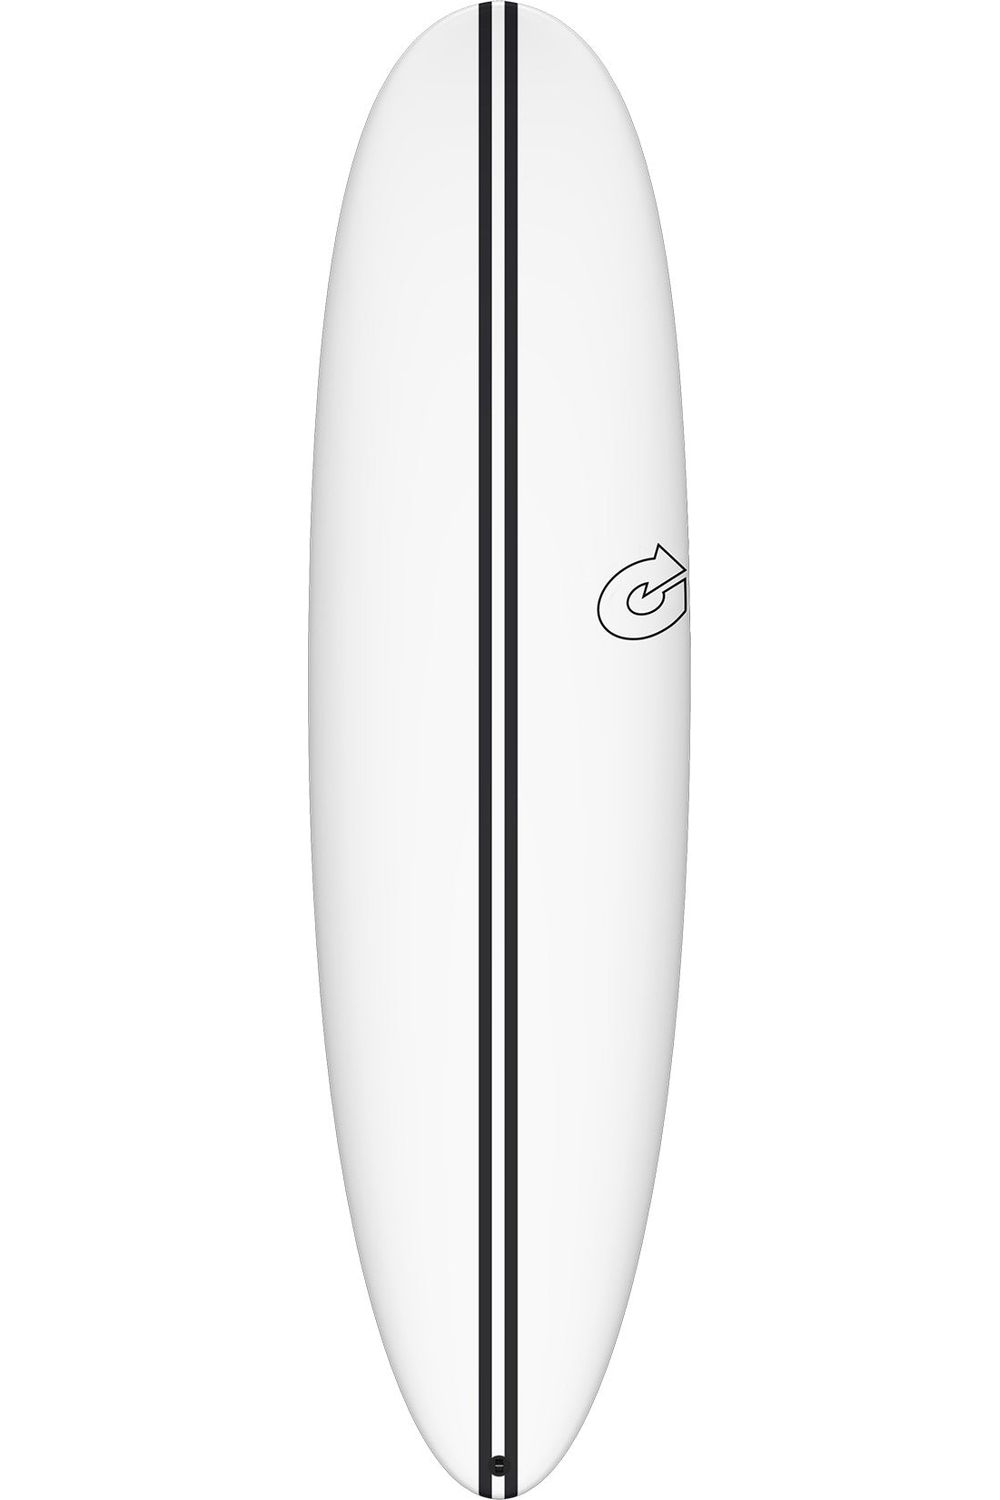 Torq TEC M2 Surfboard in White